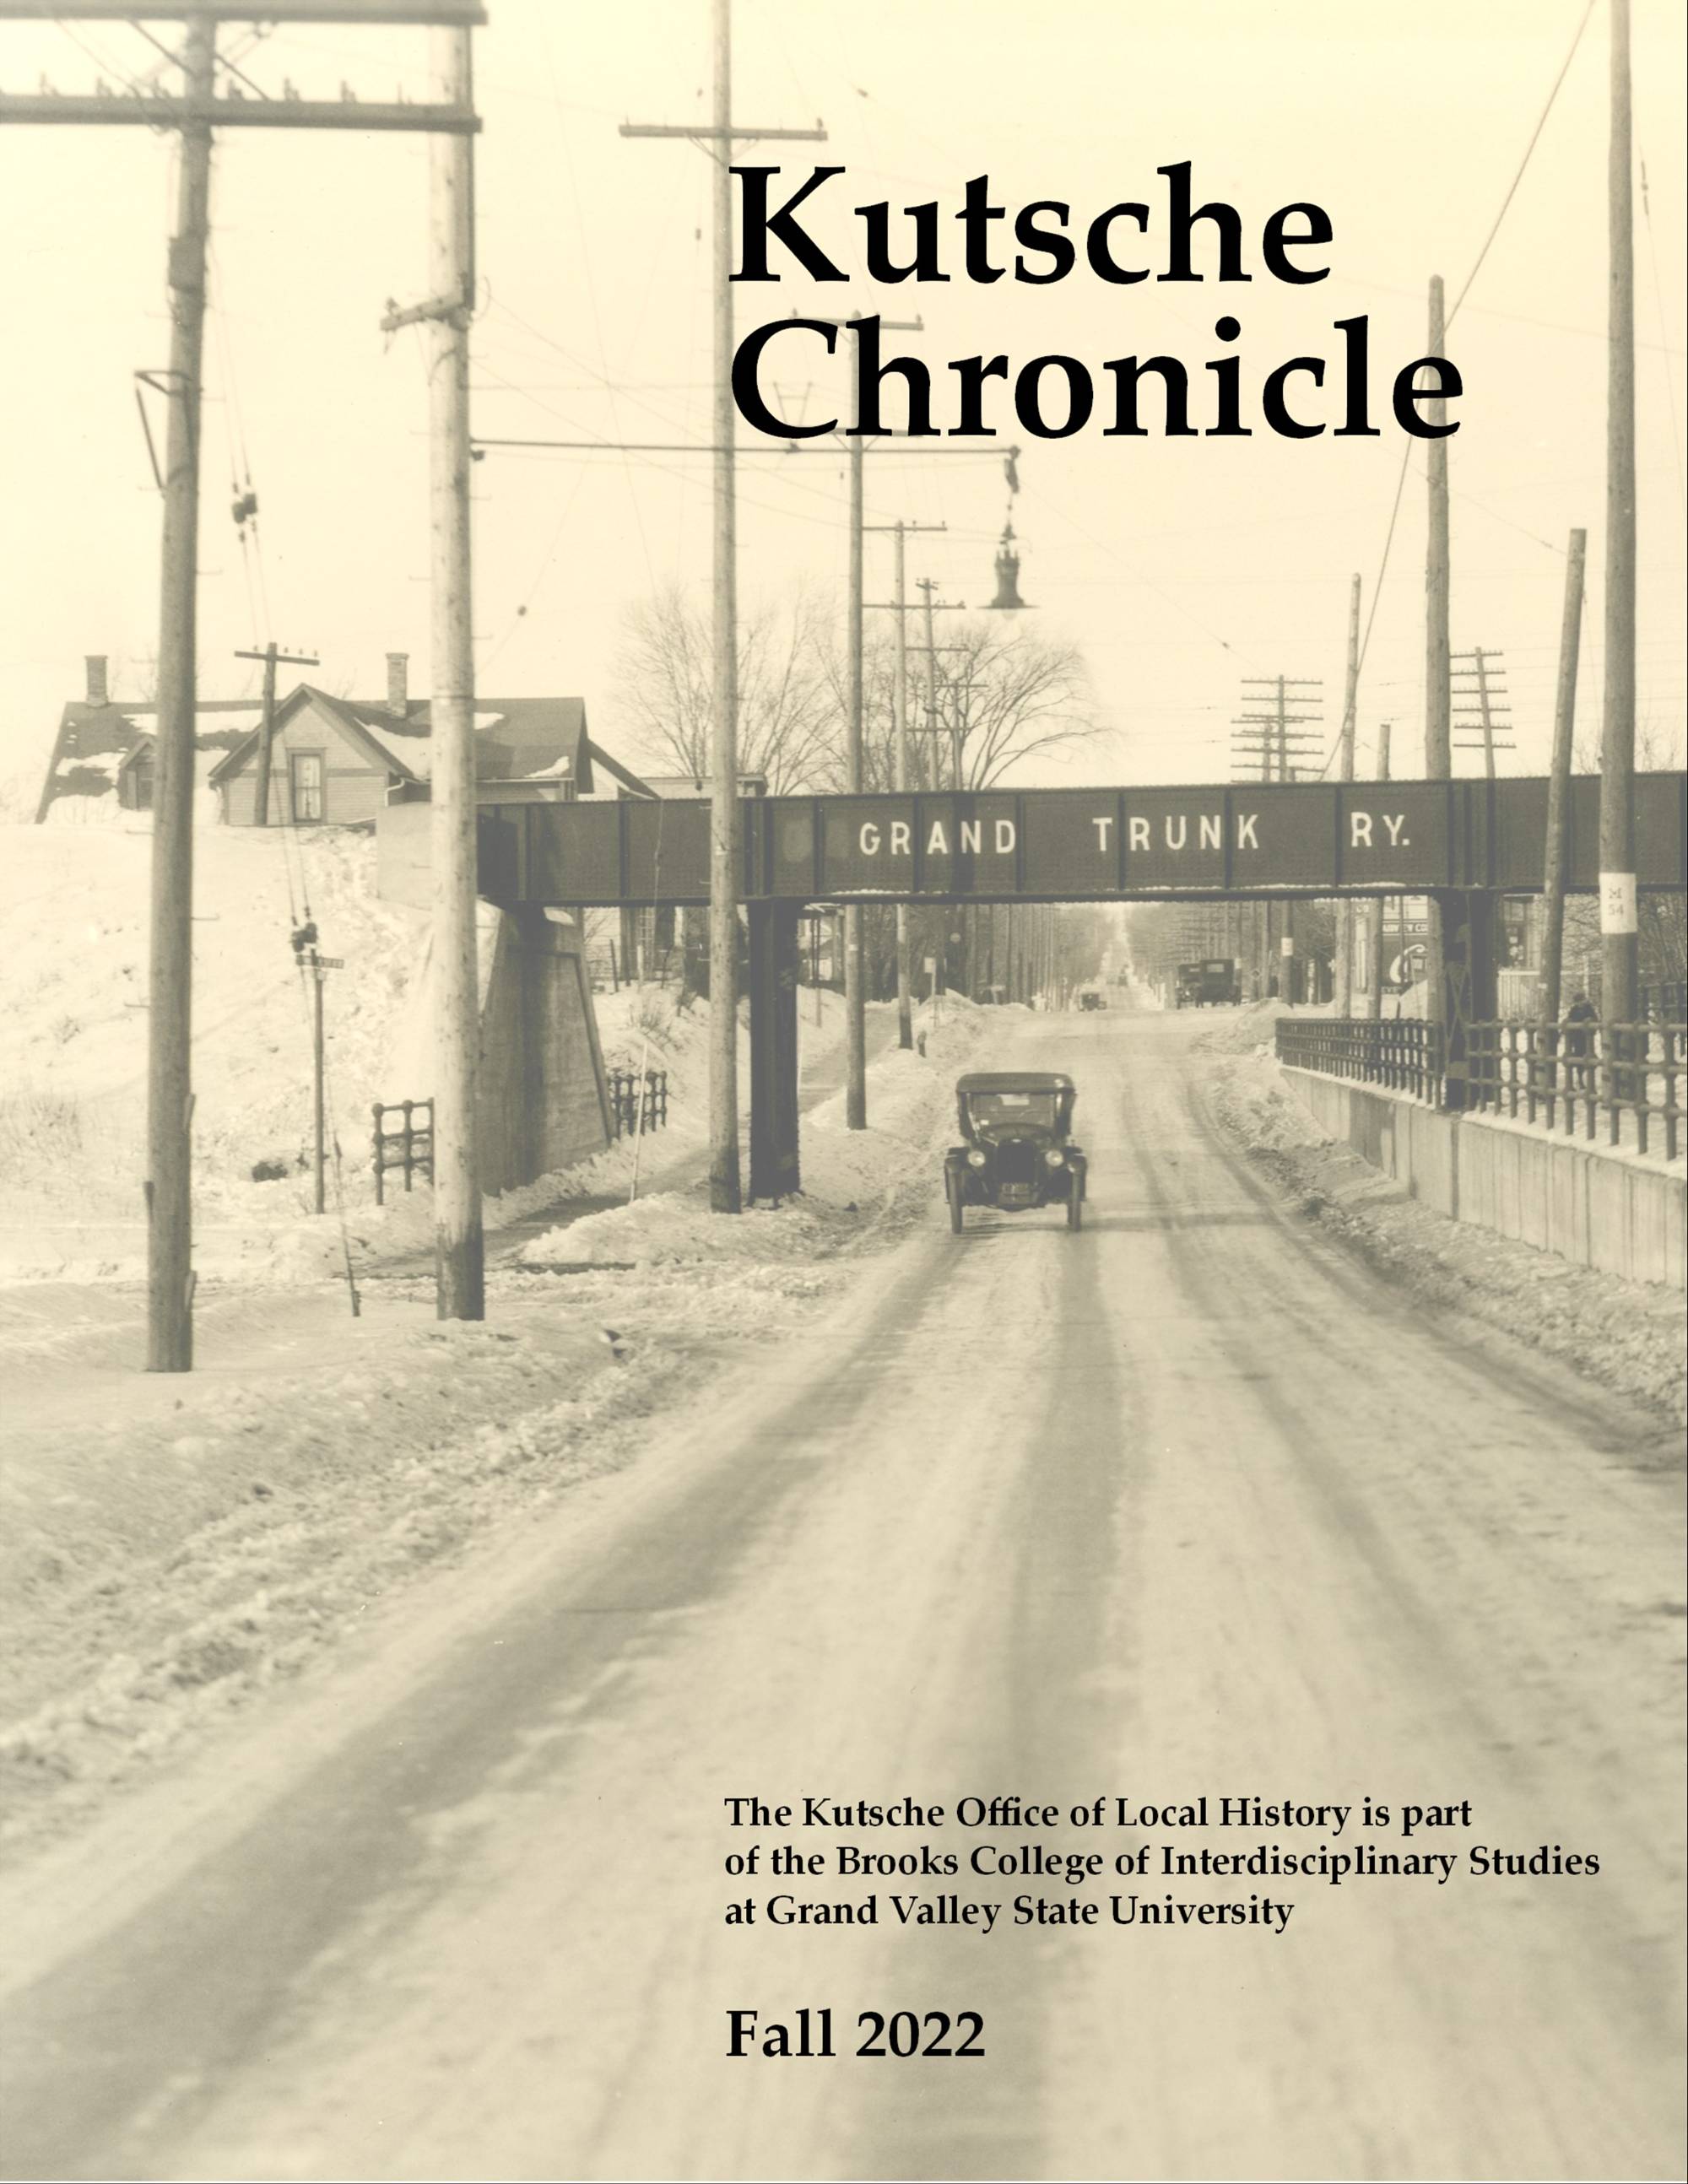 Fall 2022 Kutsche Chronicle cover featuring a vehicle crossing underneath a railroad bridge in Grand Rapids circa 1920s.